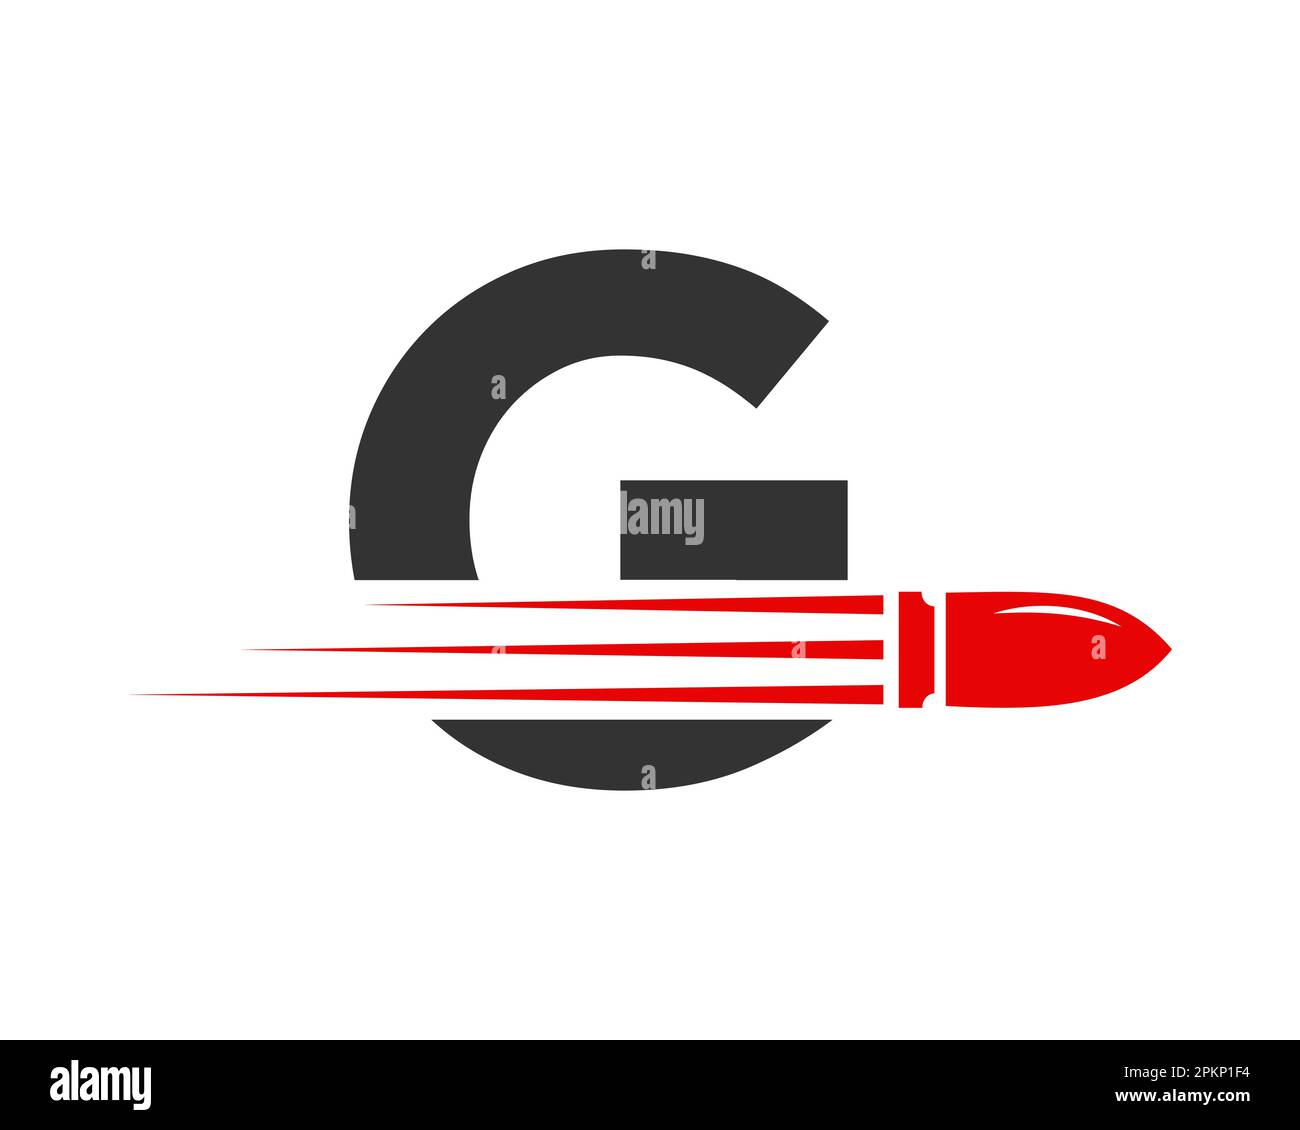 Lettre G logo Bullet avec concept arme for Safety and protection Symbol Illustration de Vecteur